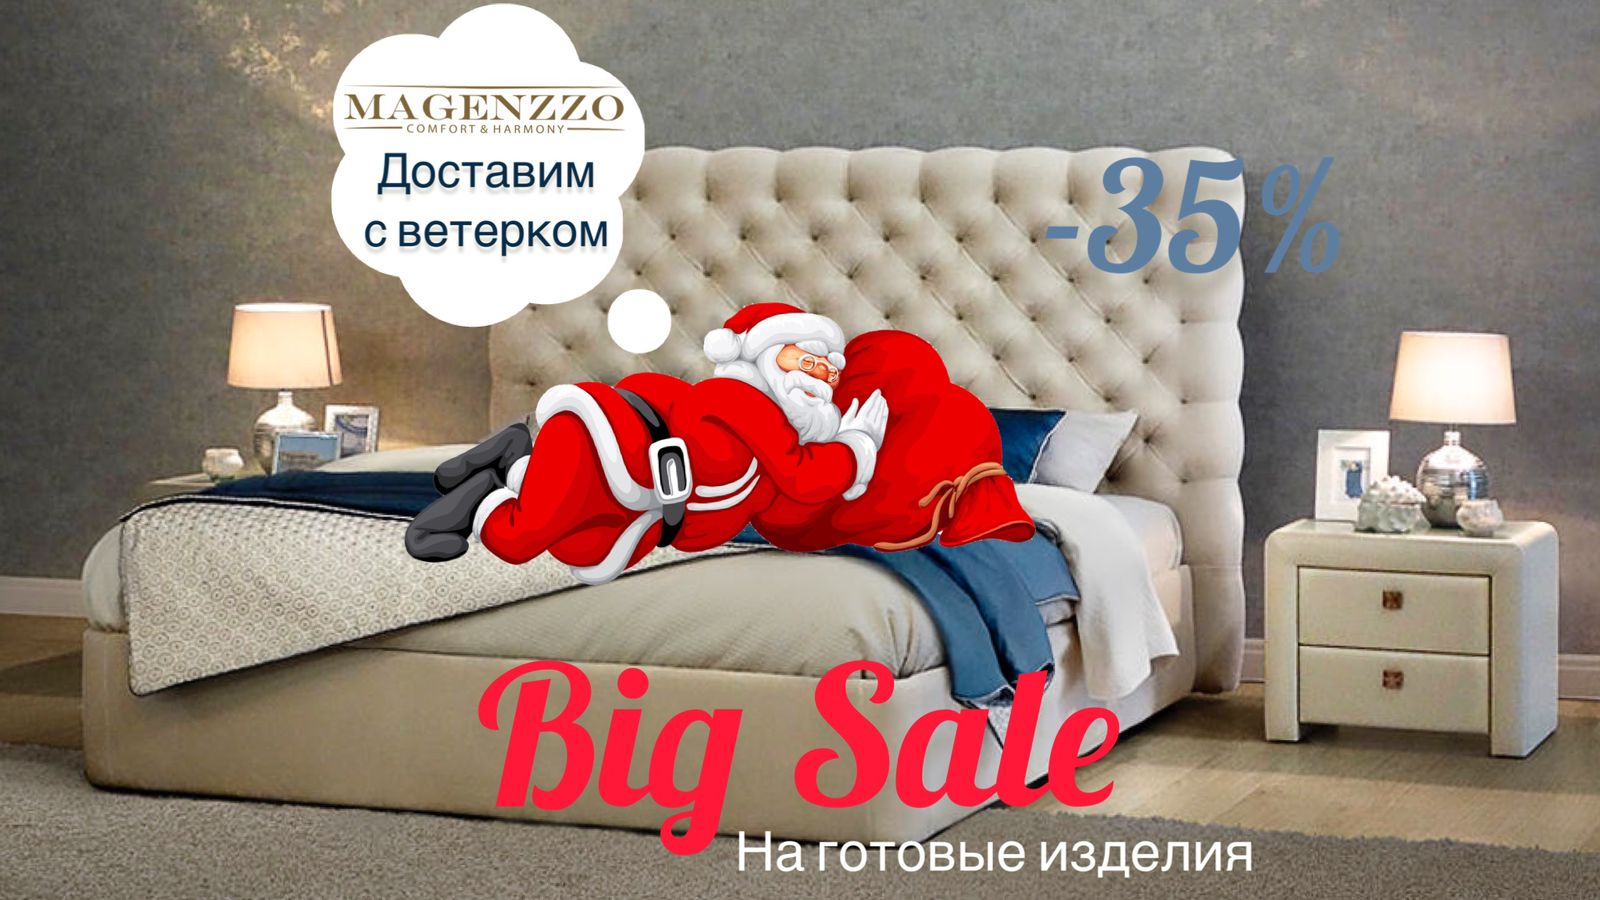 Big Sale -35% на готовые изделия фабрика Magezzo